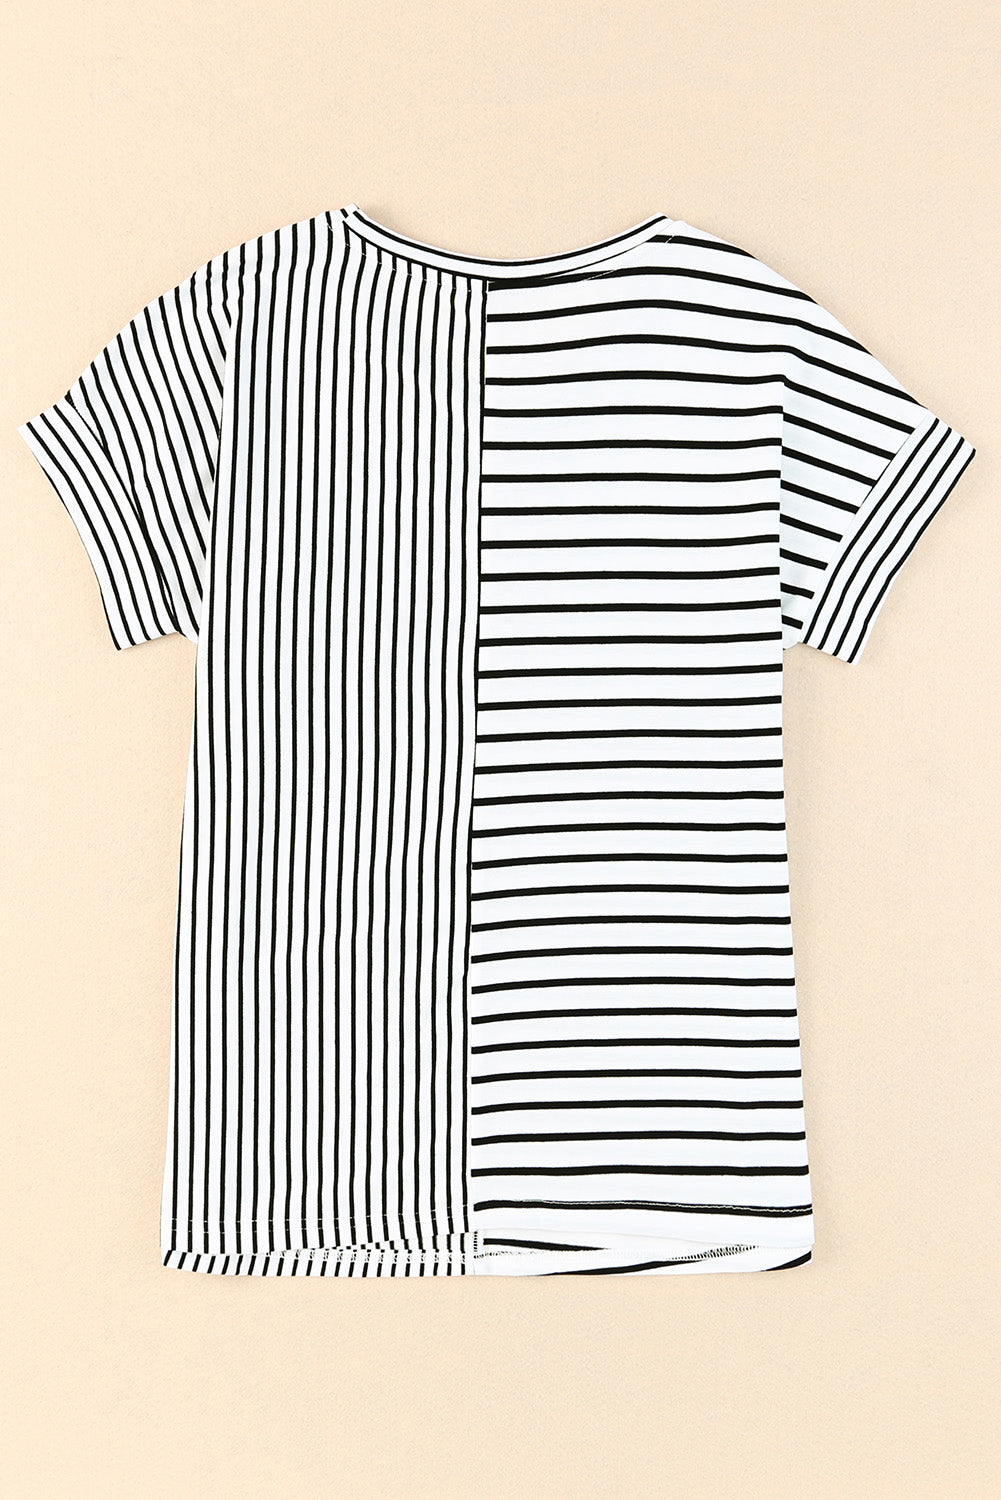 Mix Striped Print Chest Pocket T Shirt